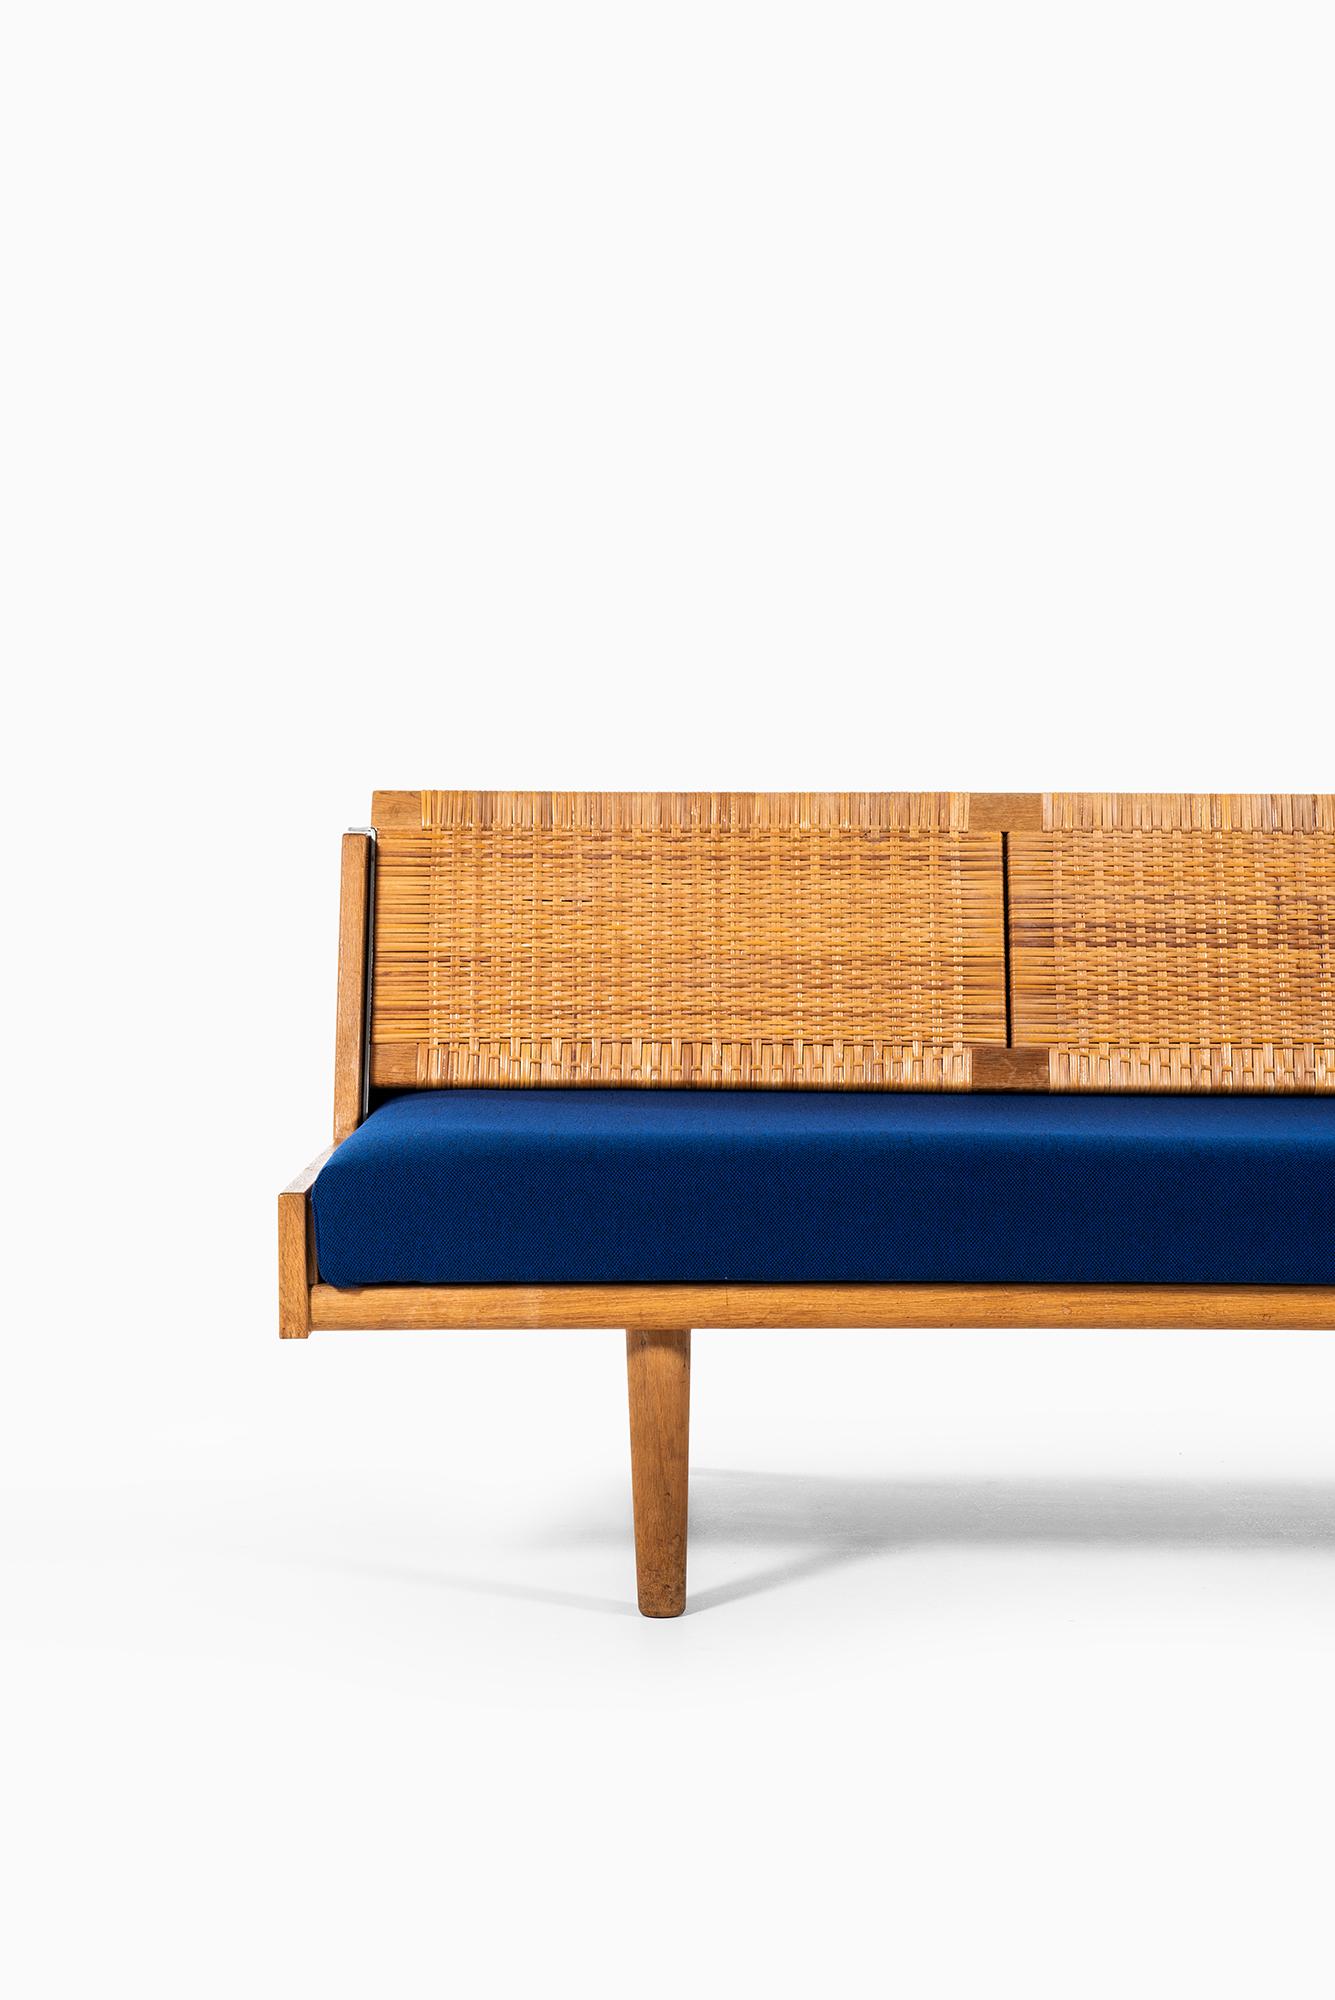 Sofa or daybed model GE-258 designed by Hans Wegner. Produced by GETAMA in Denmark.